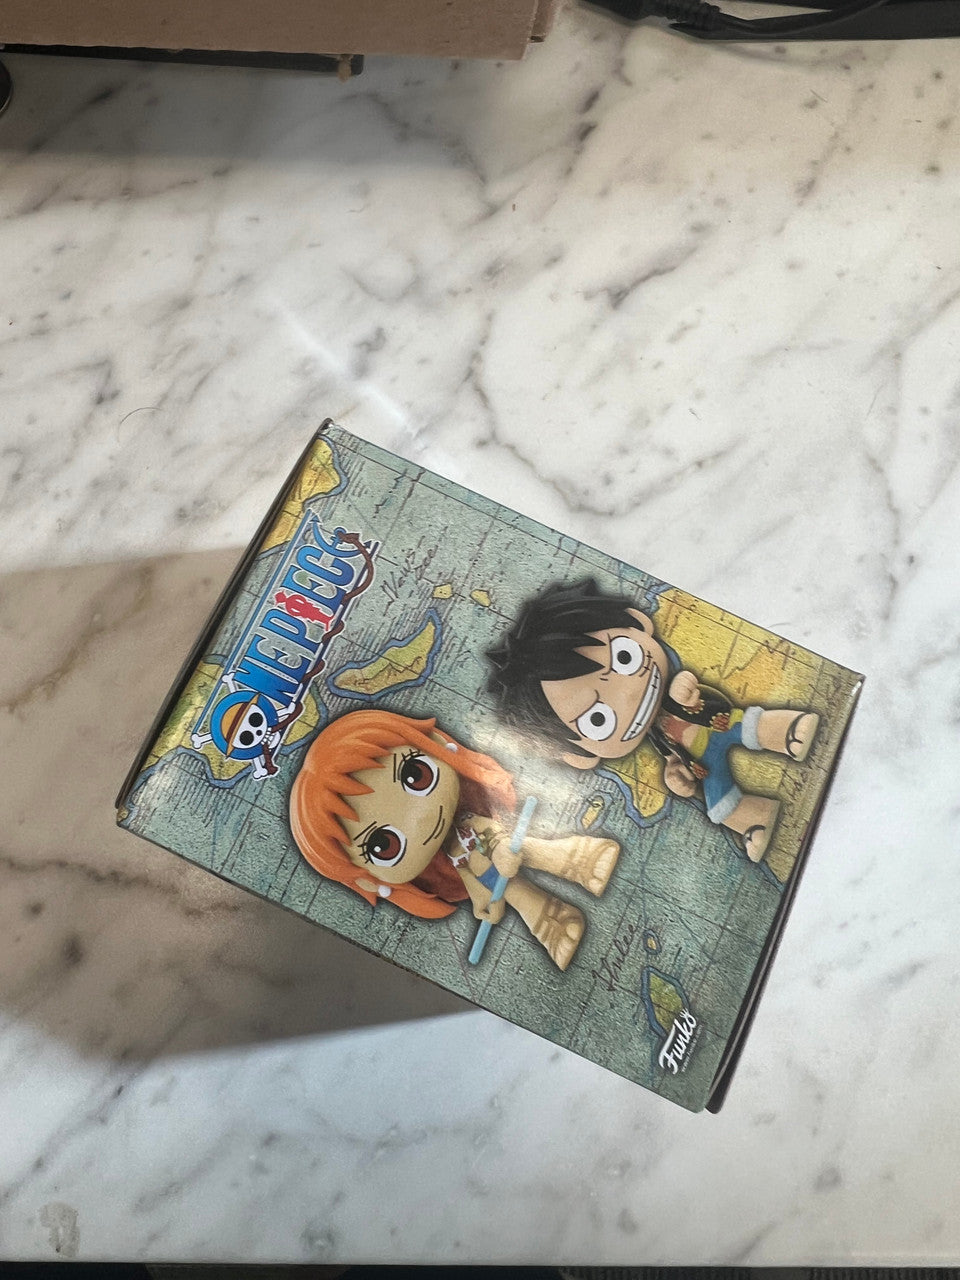 Funko Pop Minis One Piece Nami Figure Sealed